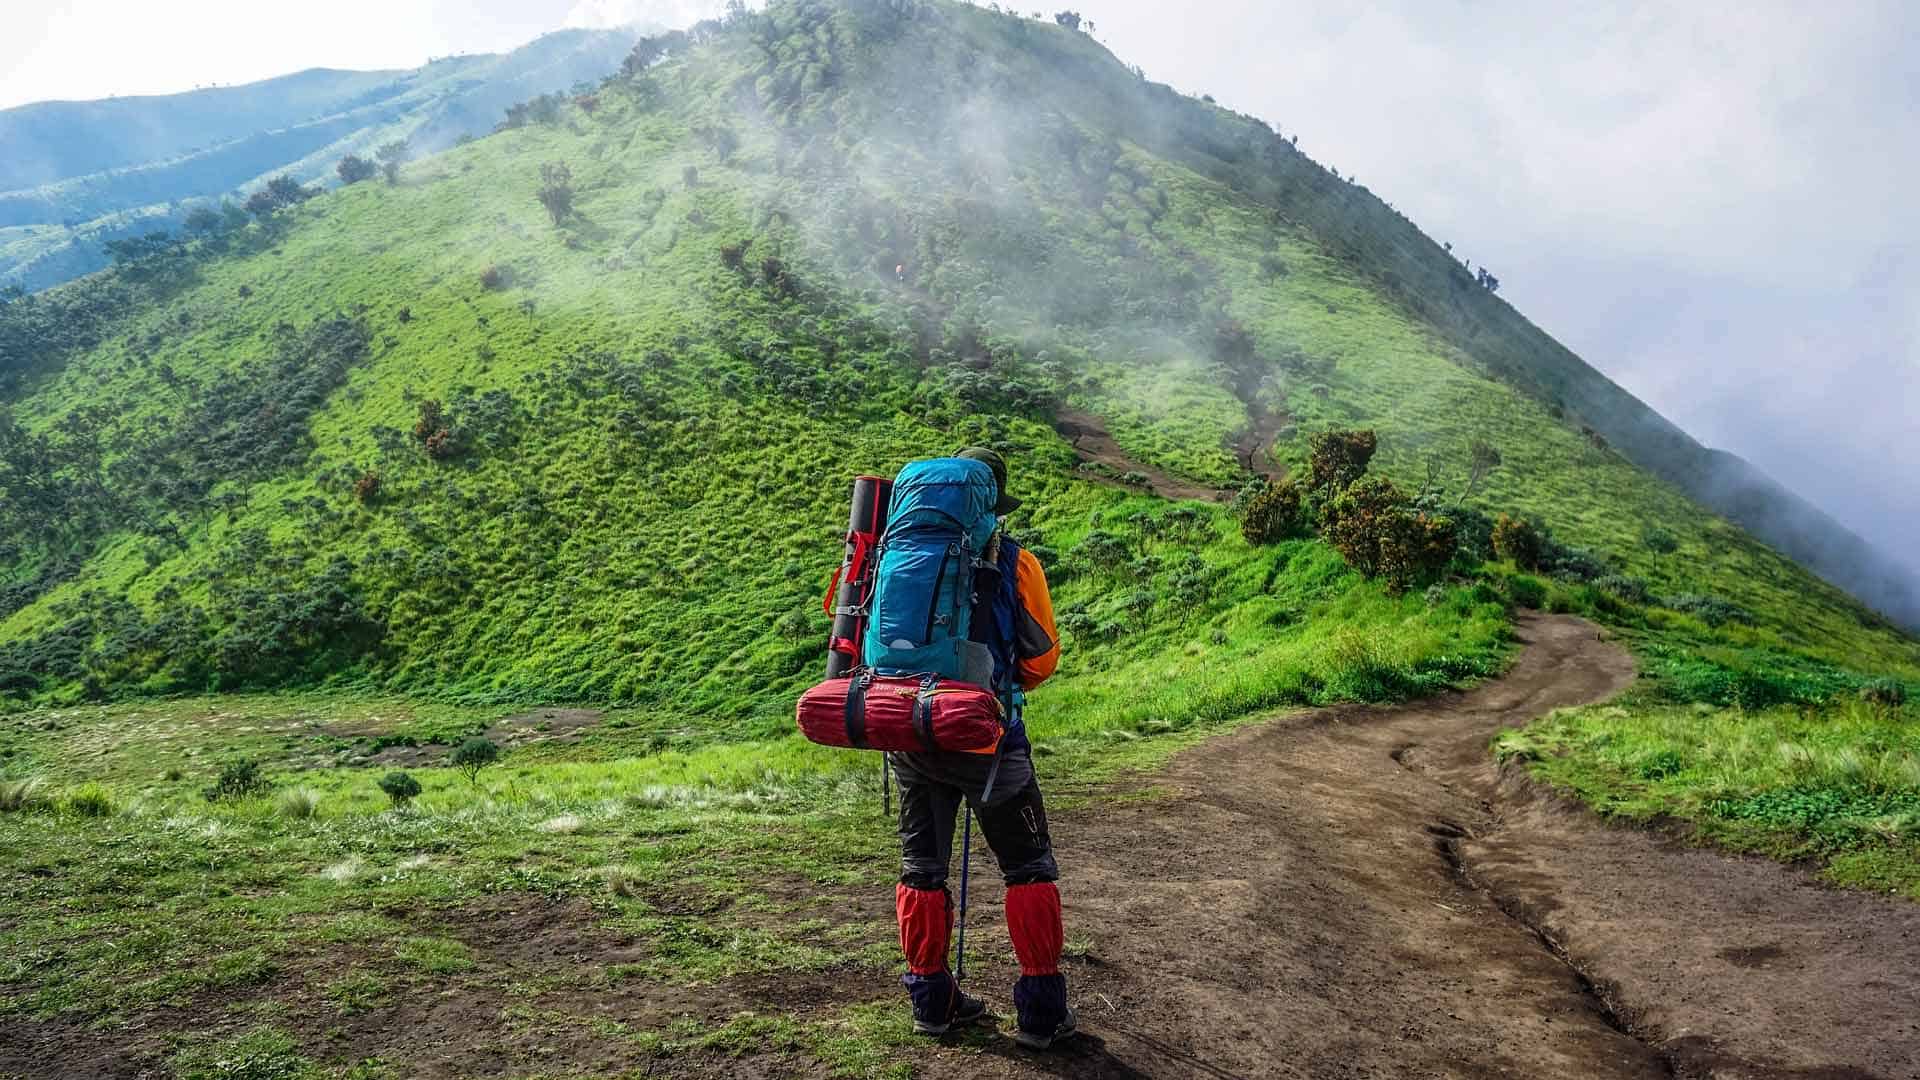 Waterproof Outdoor Sport Hiking Camping Travel Backpack Daypack Rucksack Bag HJT 